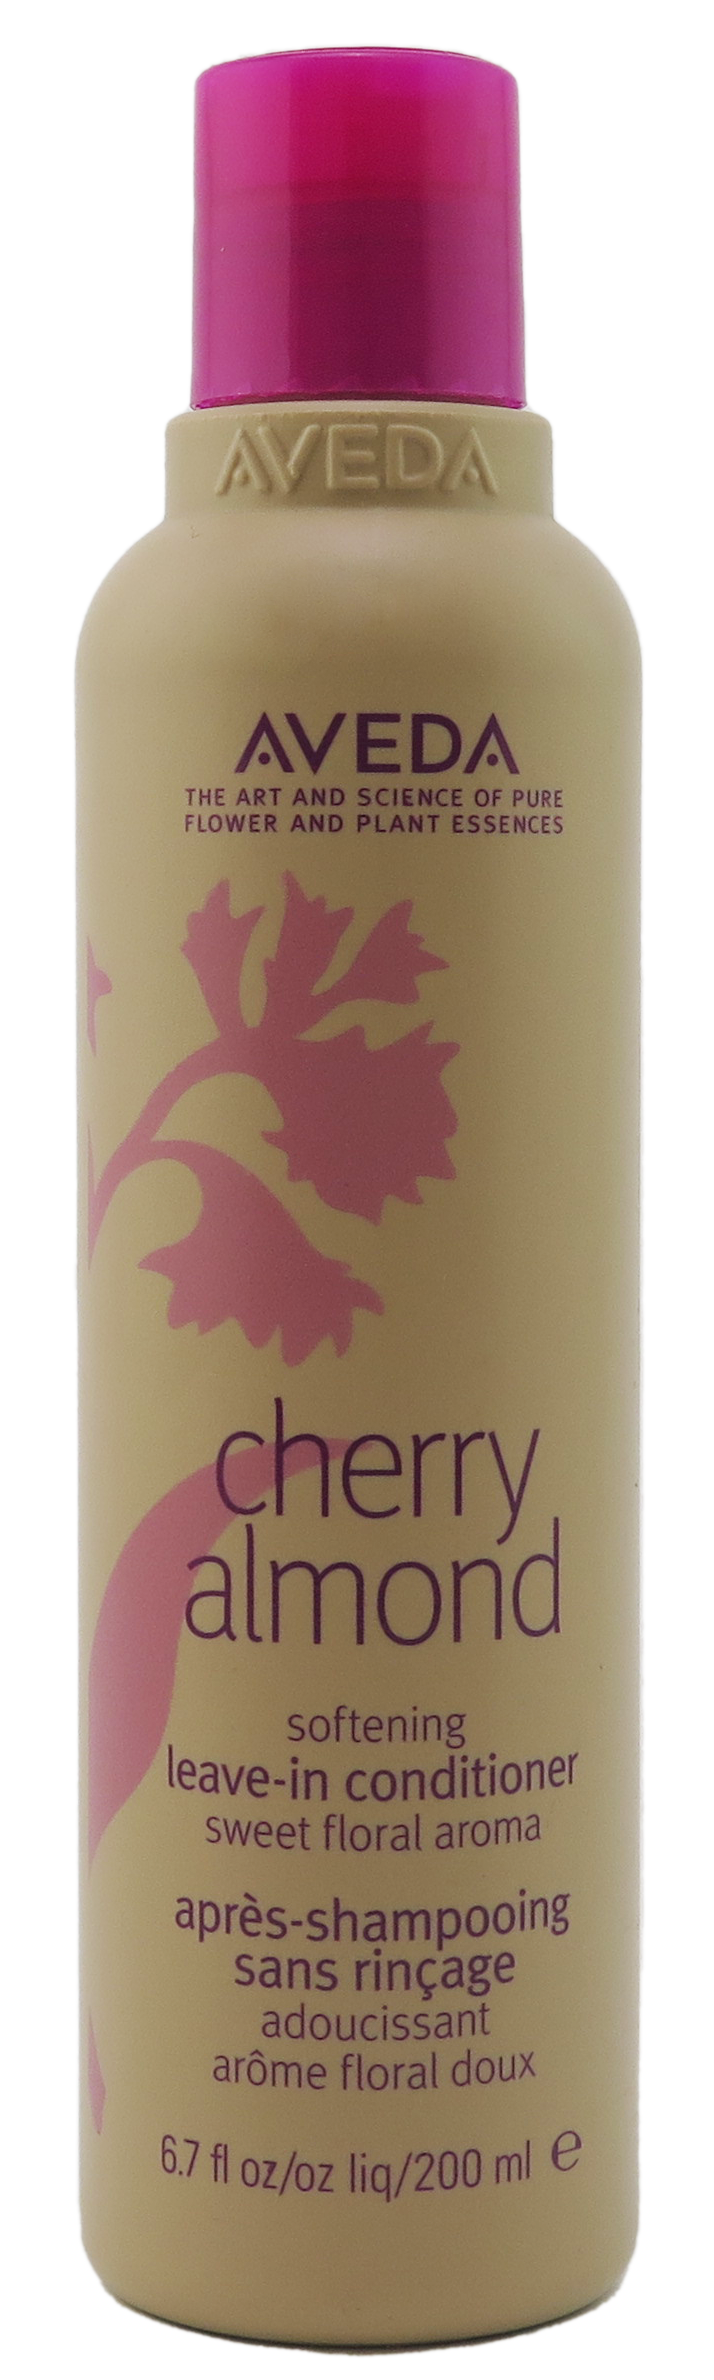 Aveda Cherry Almond Softening Leave-in Conditioner 6.7 fl oz